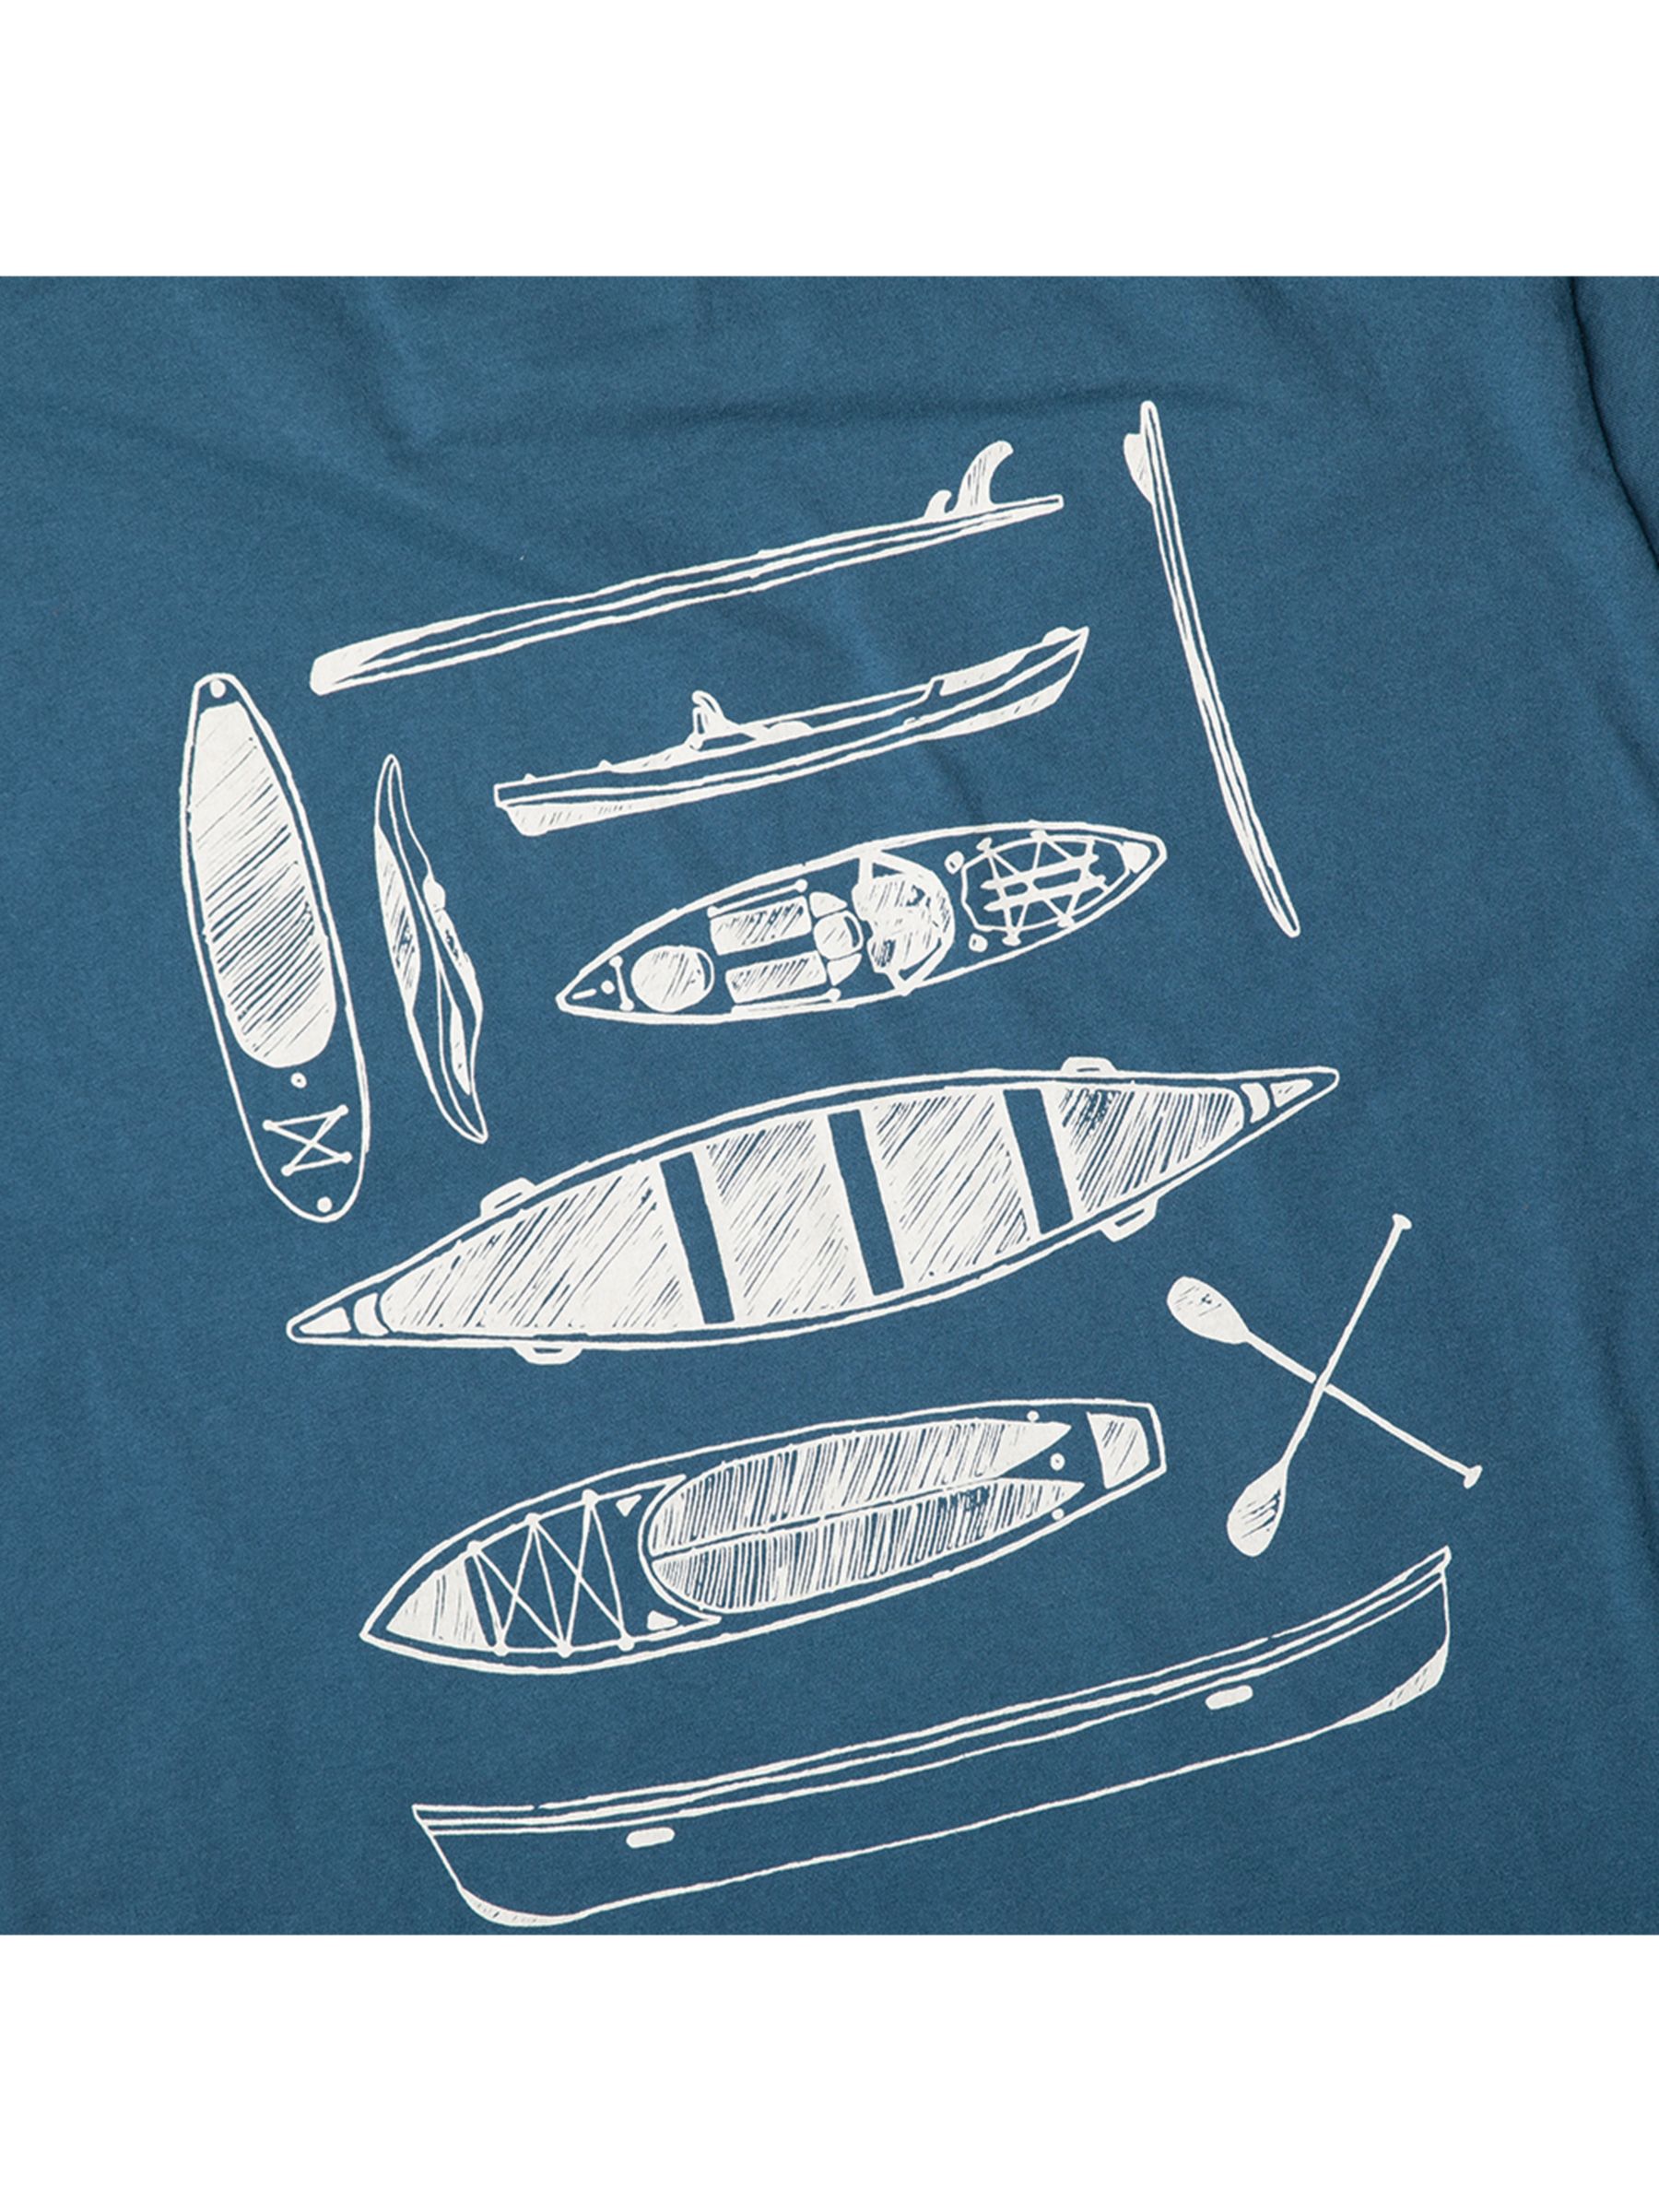 KAVU Paddle Out Organic Cotton T-Shirt, Blue, L